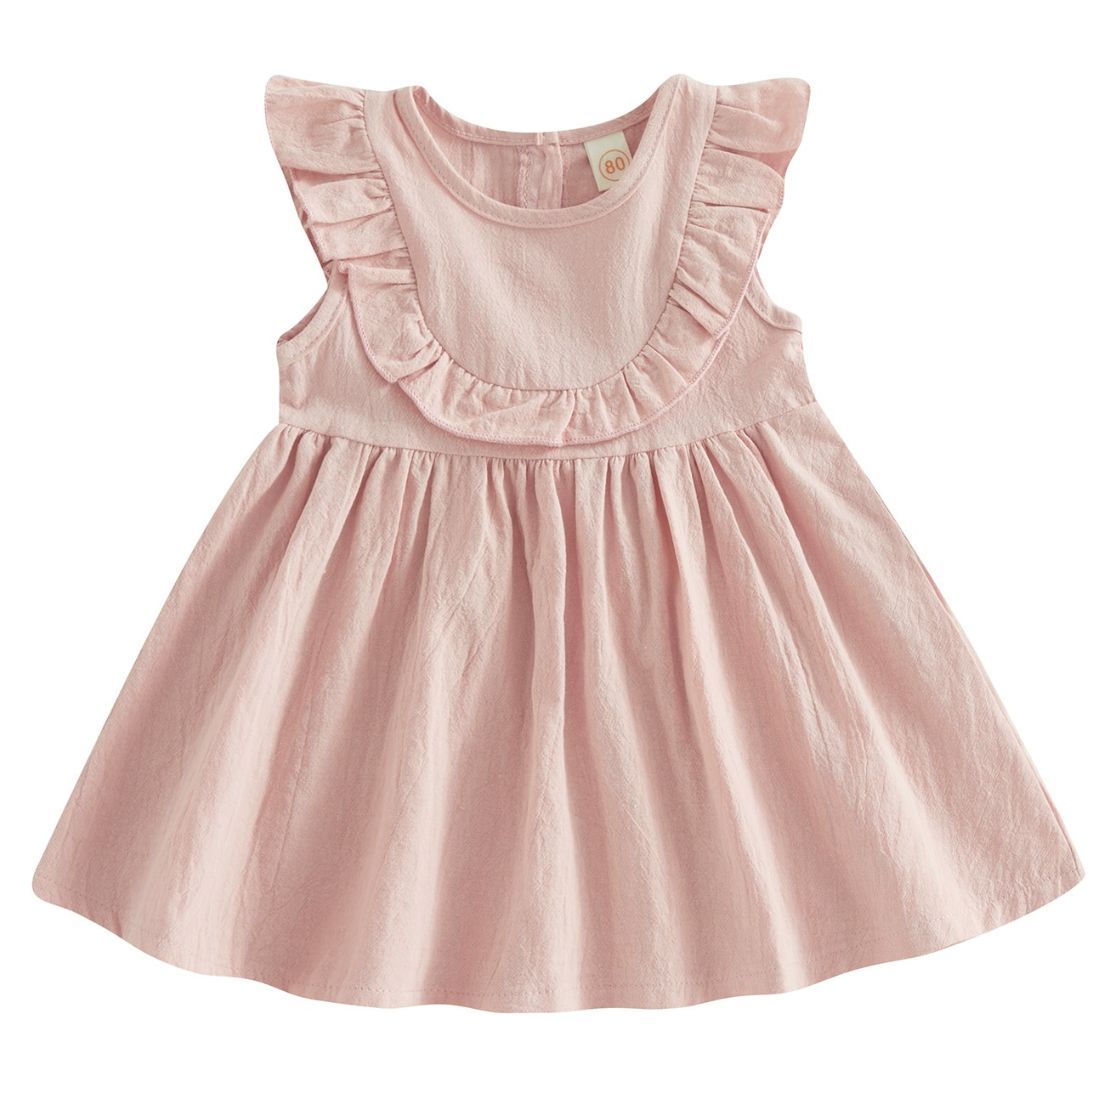 Ruffle Casual Toddler Pink Dress